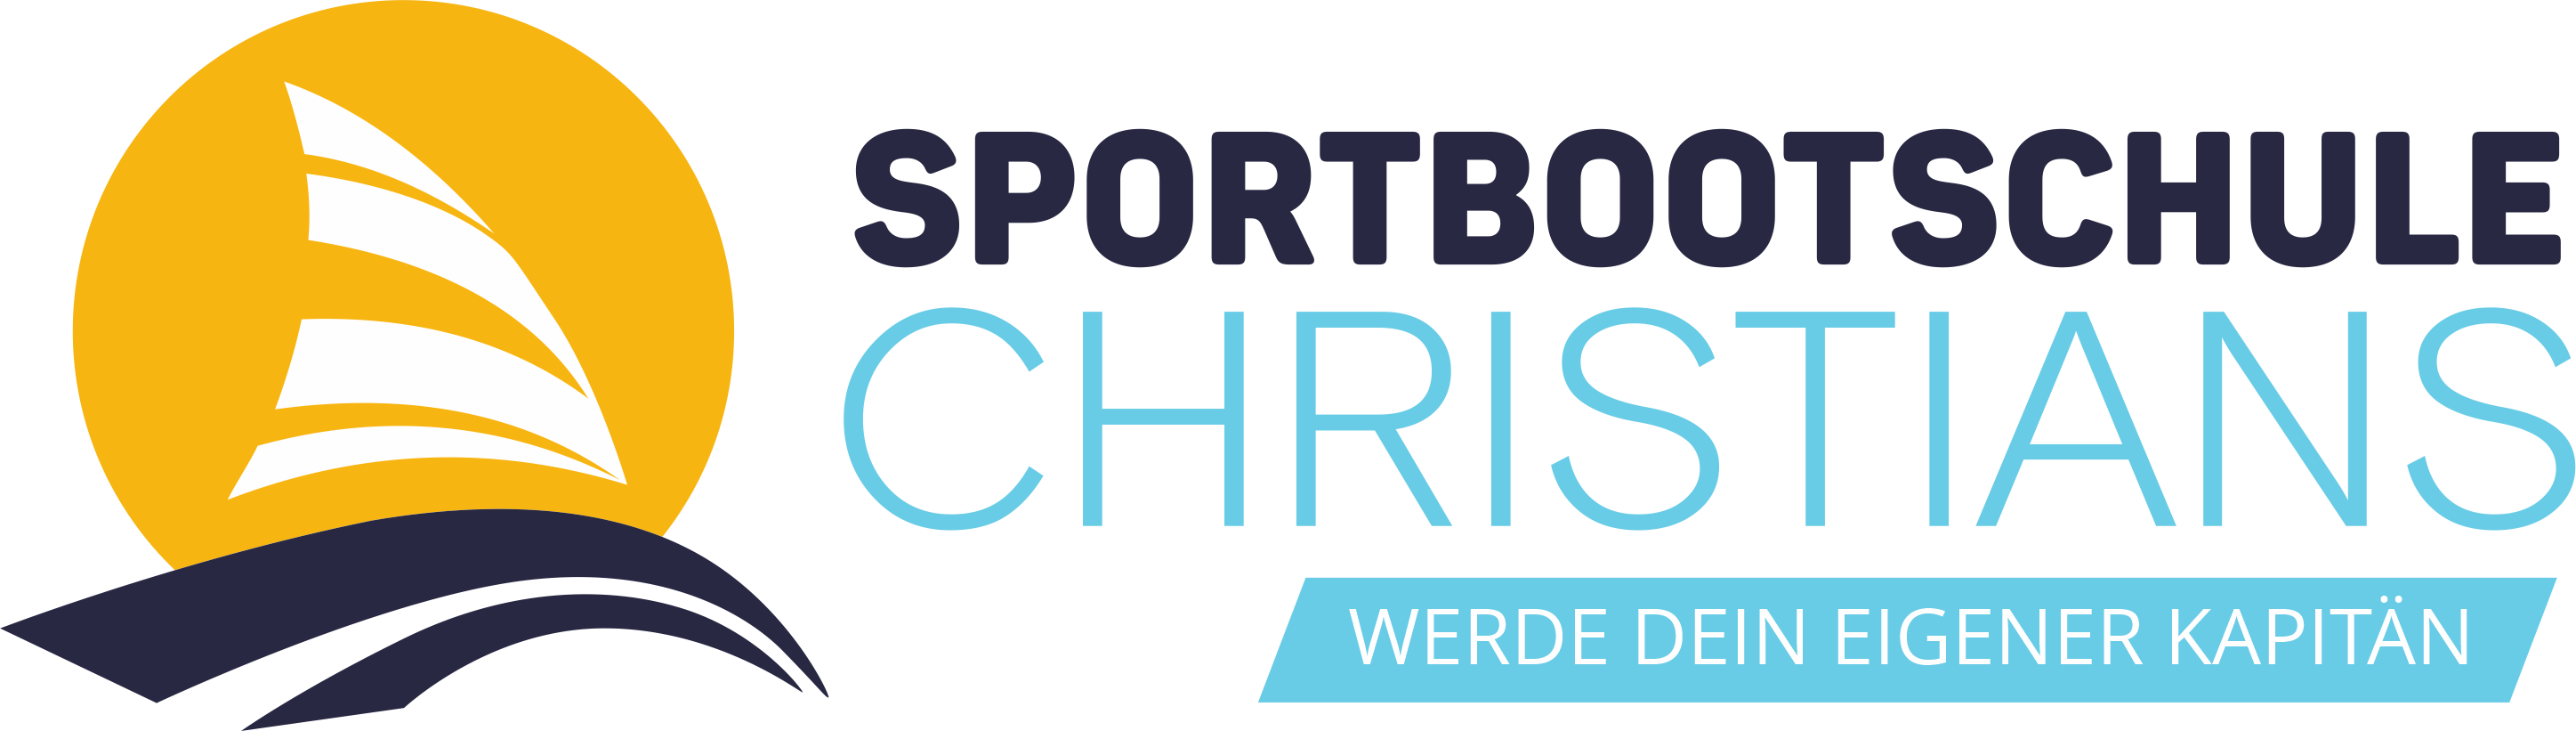 Sportbootschule Christians